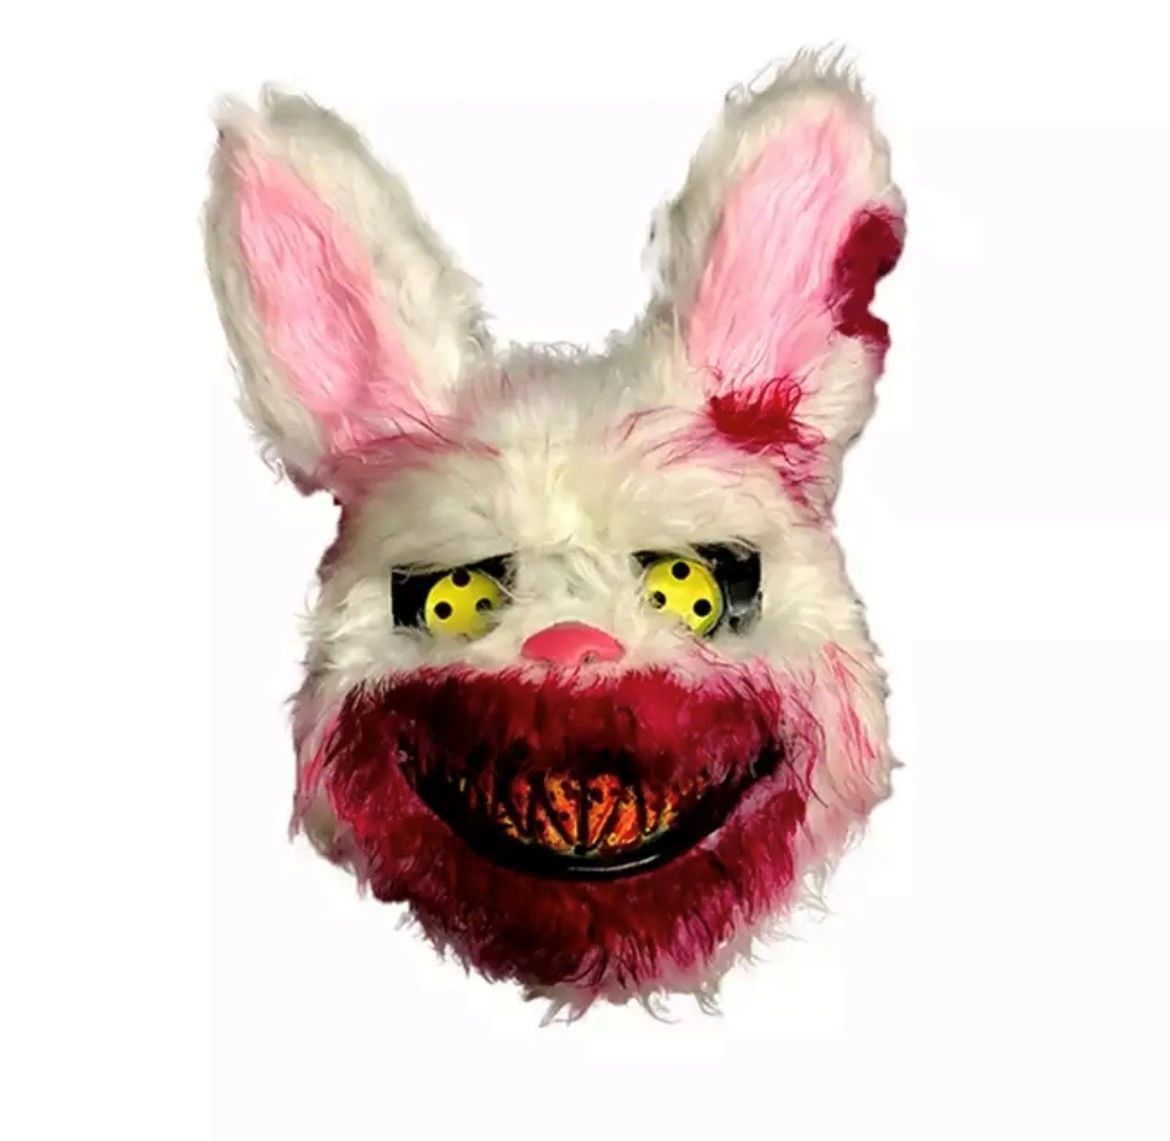 Scary Halloween Rabbit Mask